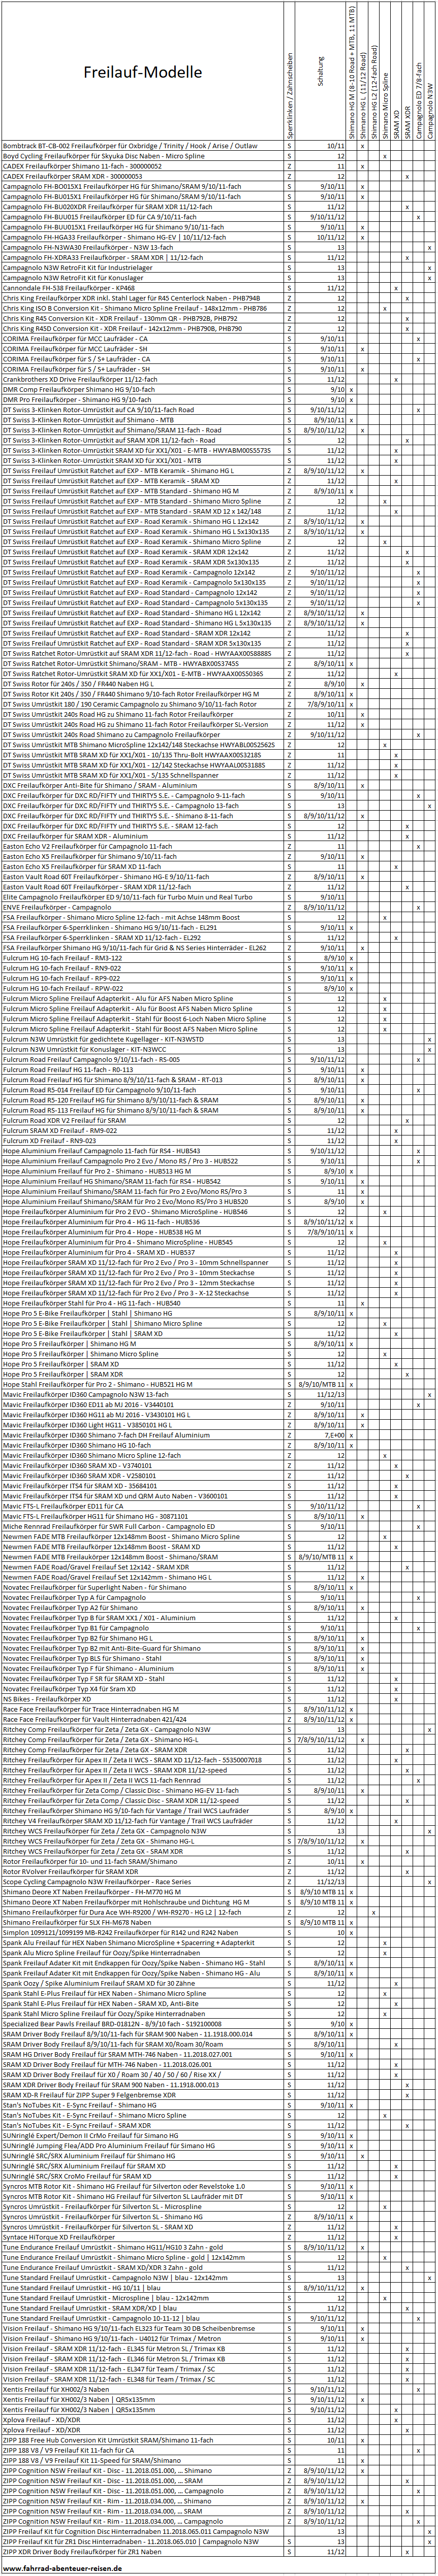 Alle Freilauf Modelle - Tabelle